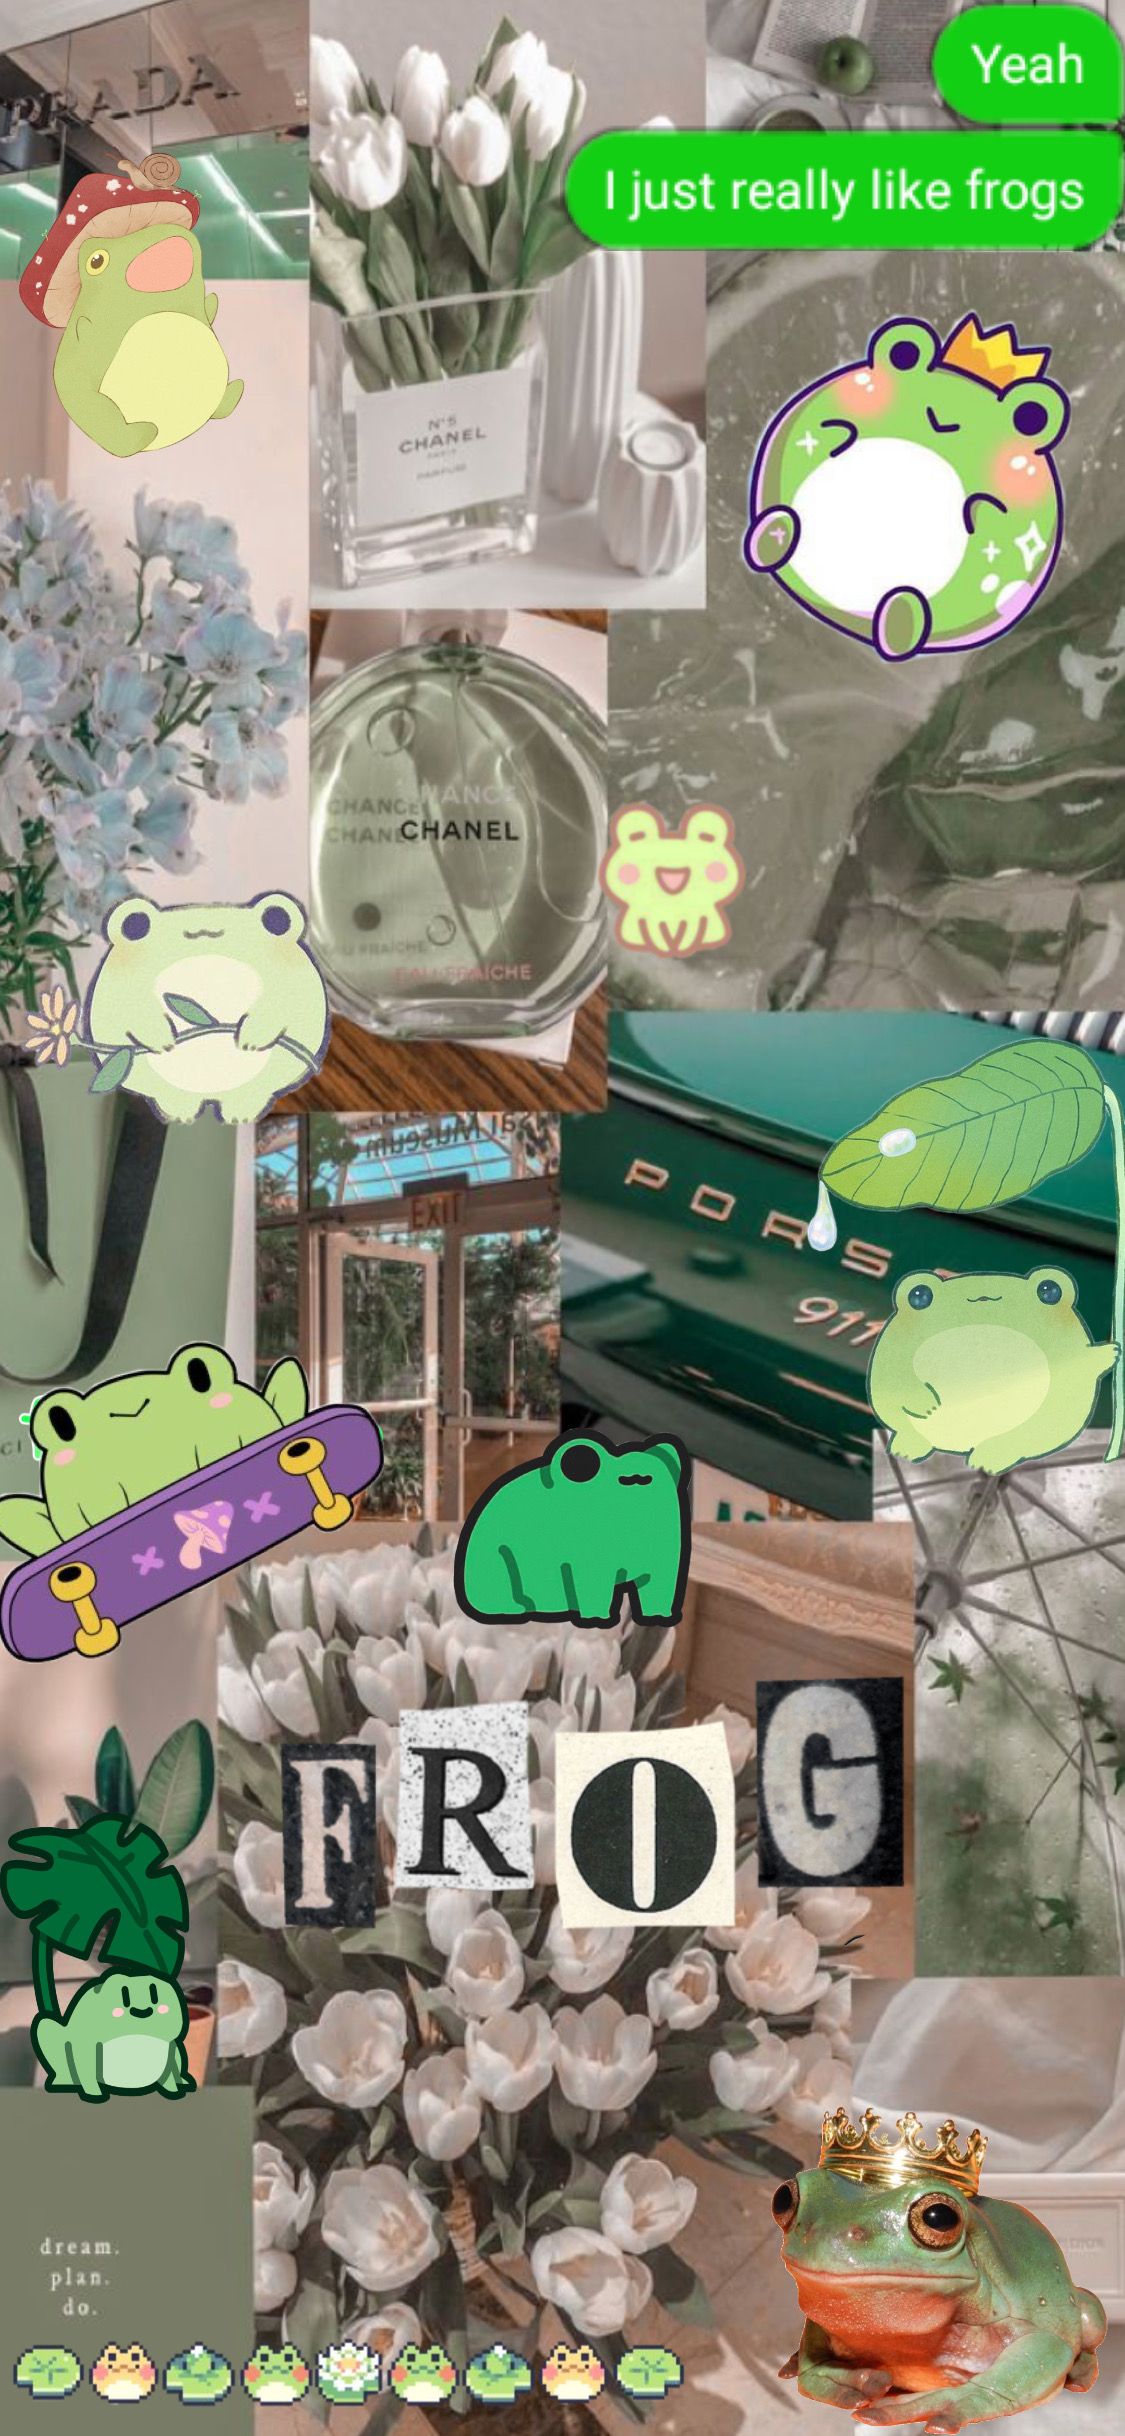 Frog wallpaper. Fond d'écran coloré, Fond d'ecran pastel, Fond d'écran téléphone